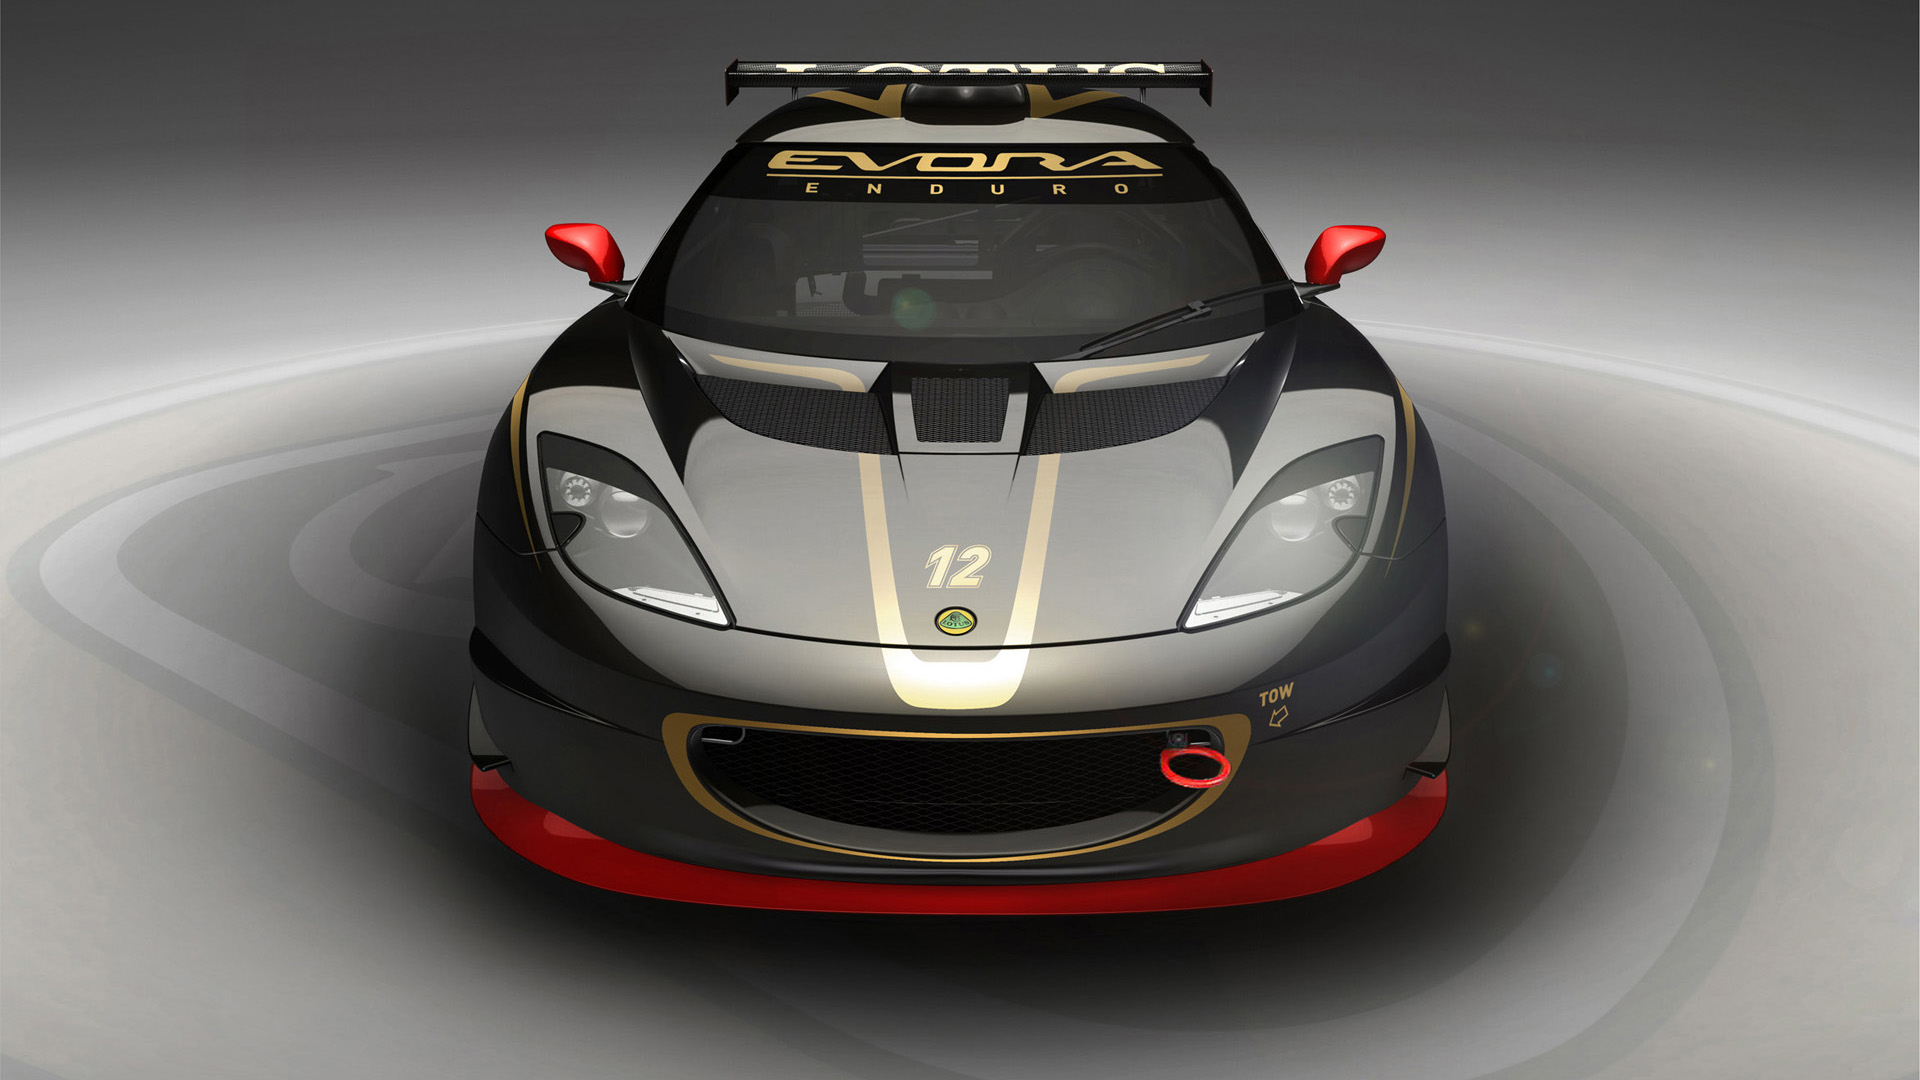  2011 Lotus Evora Endora GT Concept Wallpaper.